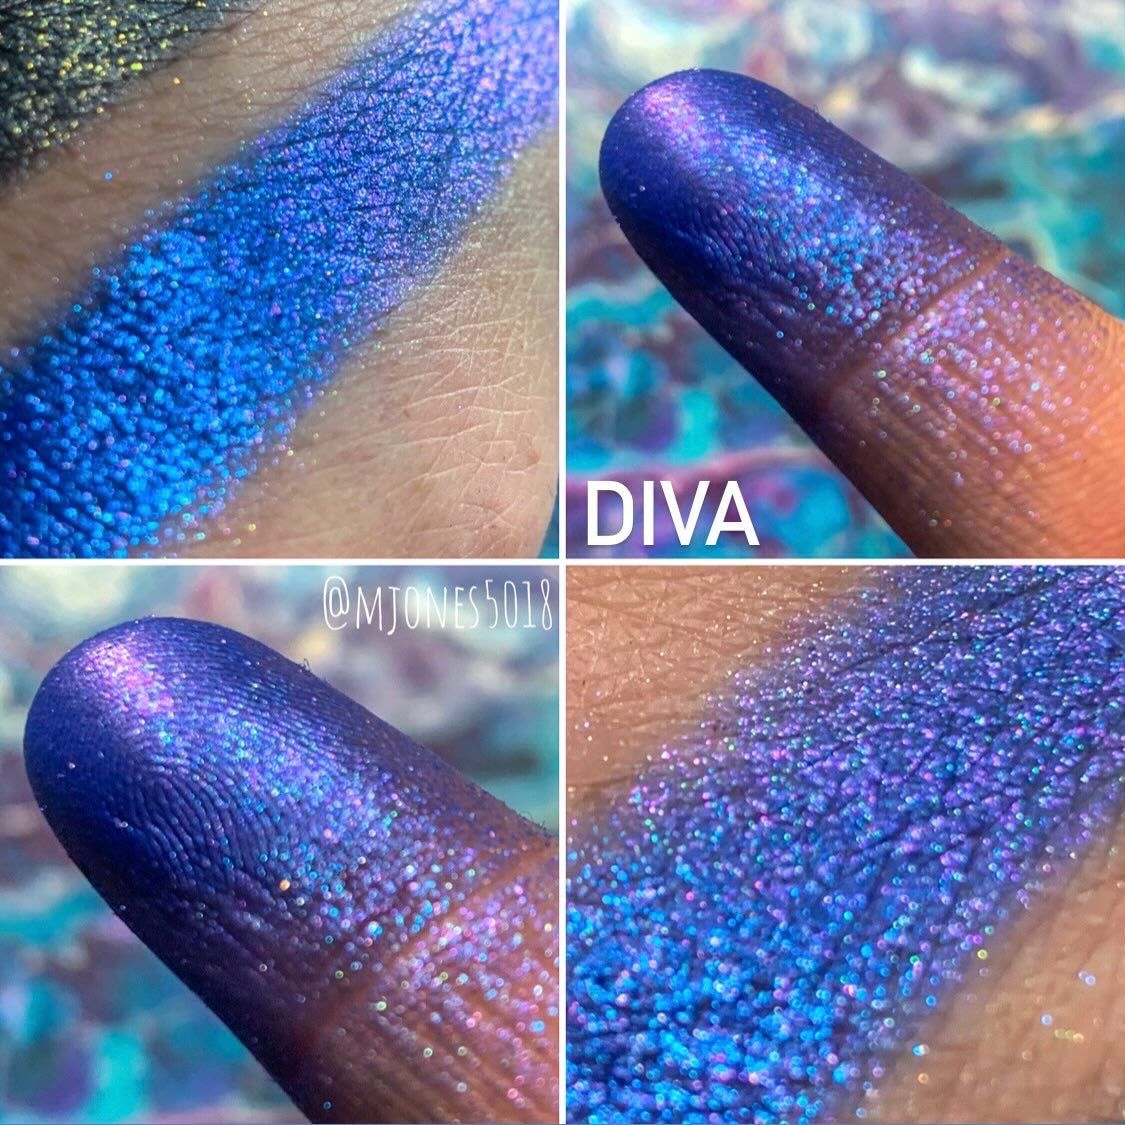 Diva [Divinity]